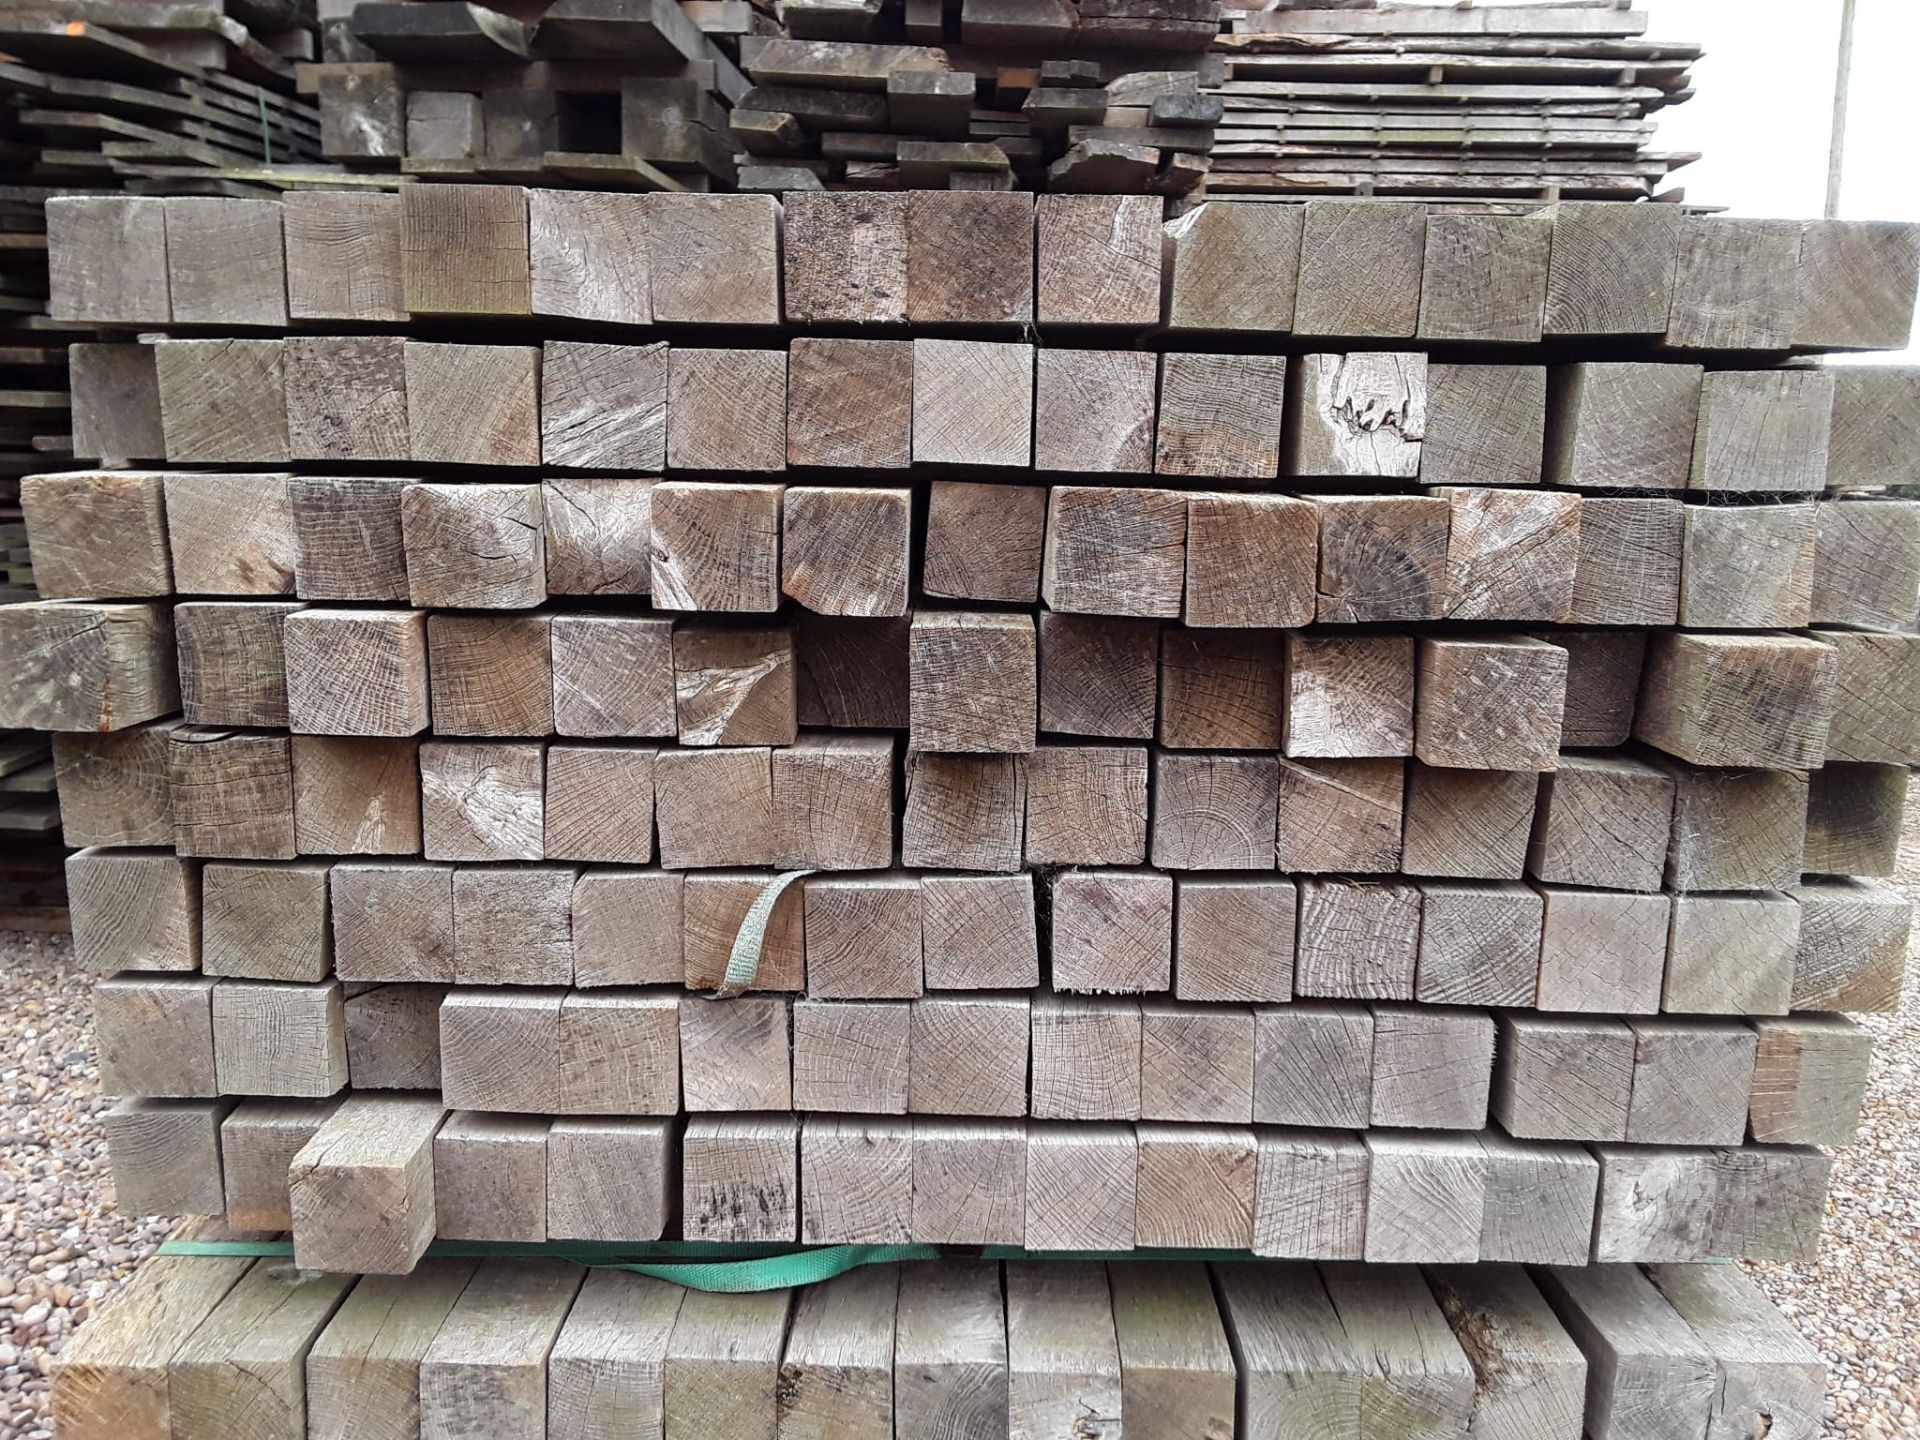 100x hardwood air dried timber sawn rustic English oak posts - Image 6 of 9